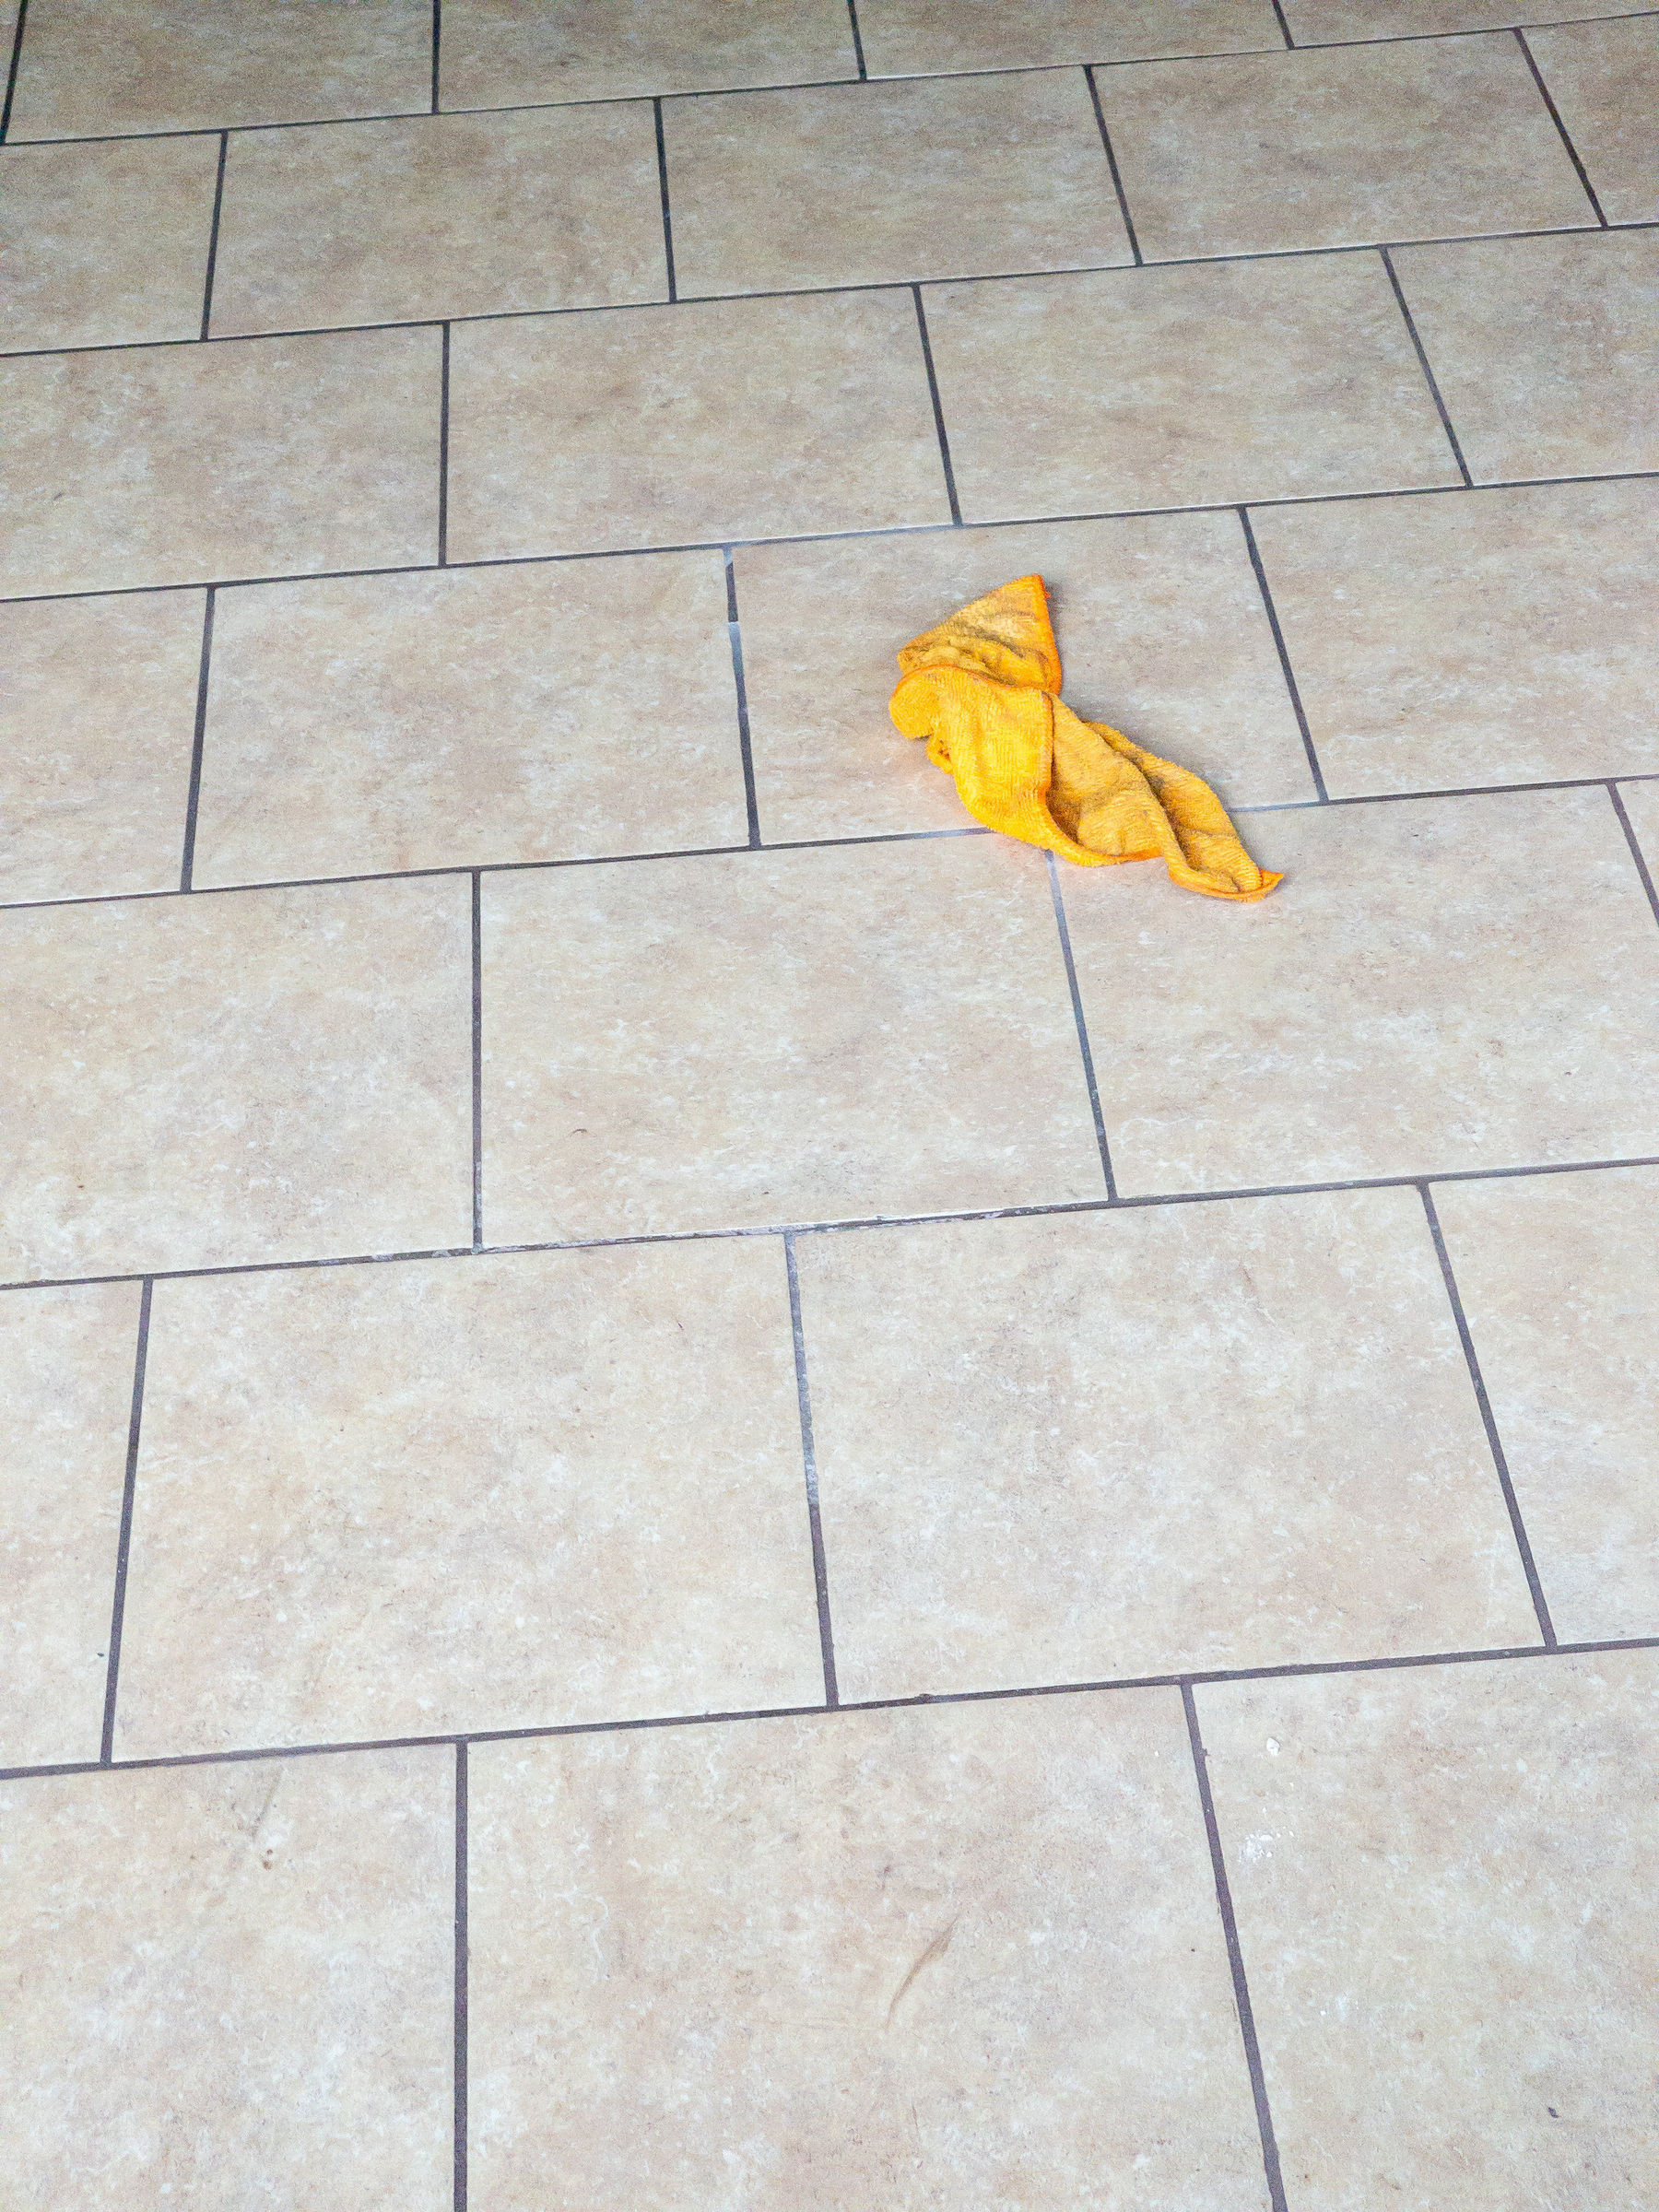 Yellow-orange rag on a tile floor.